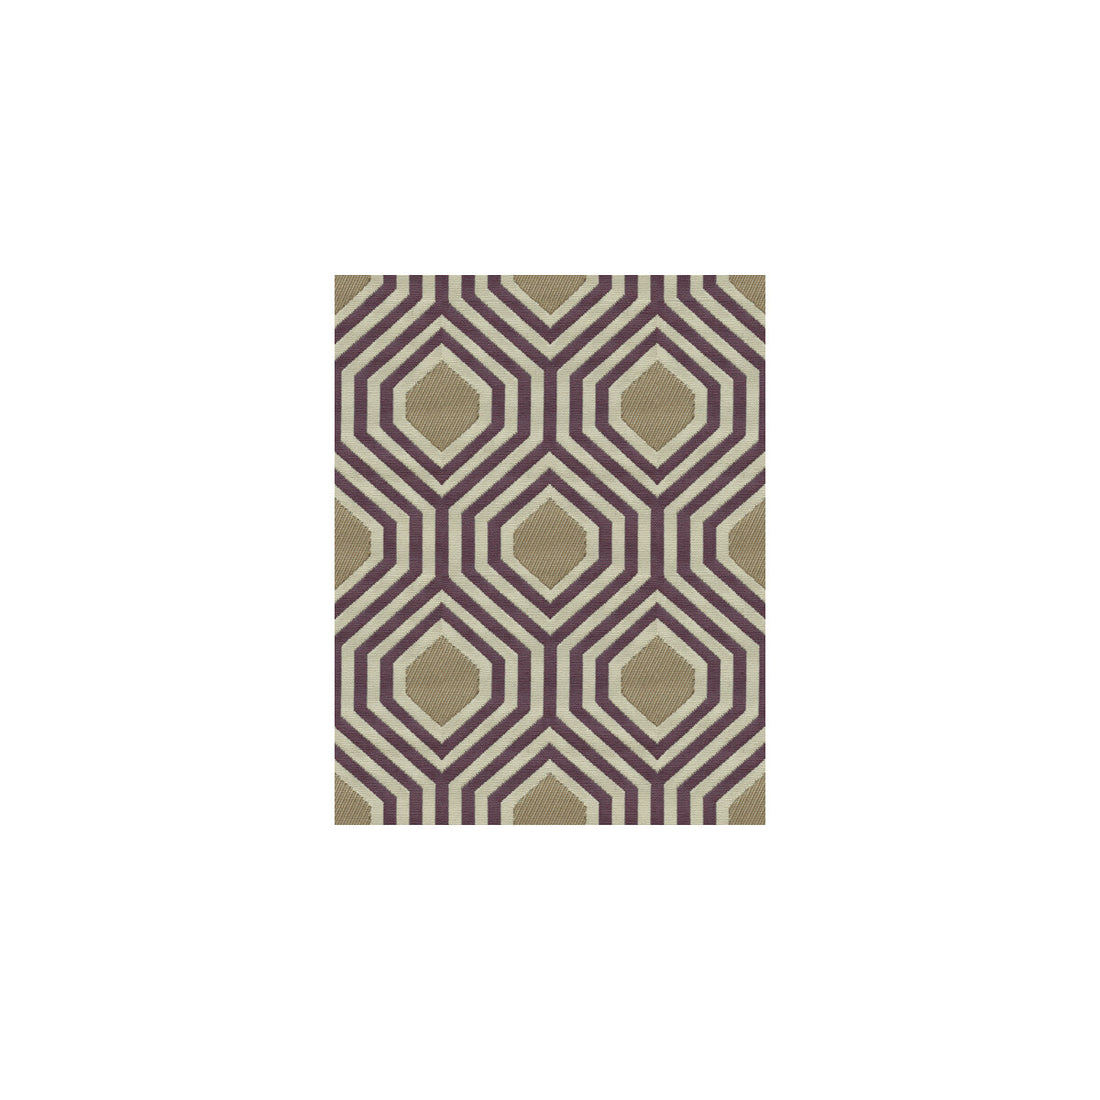 Galvani fabric in raisin color - pattern 31496.1610.0 - by Kravet Design